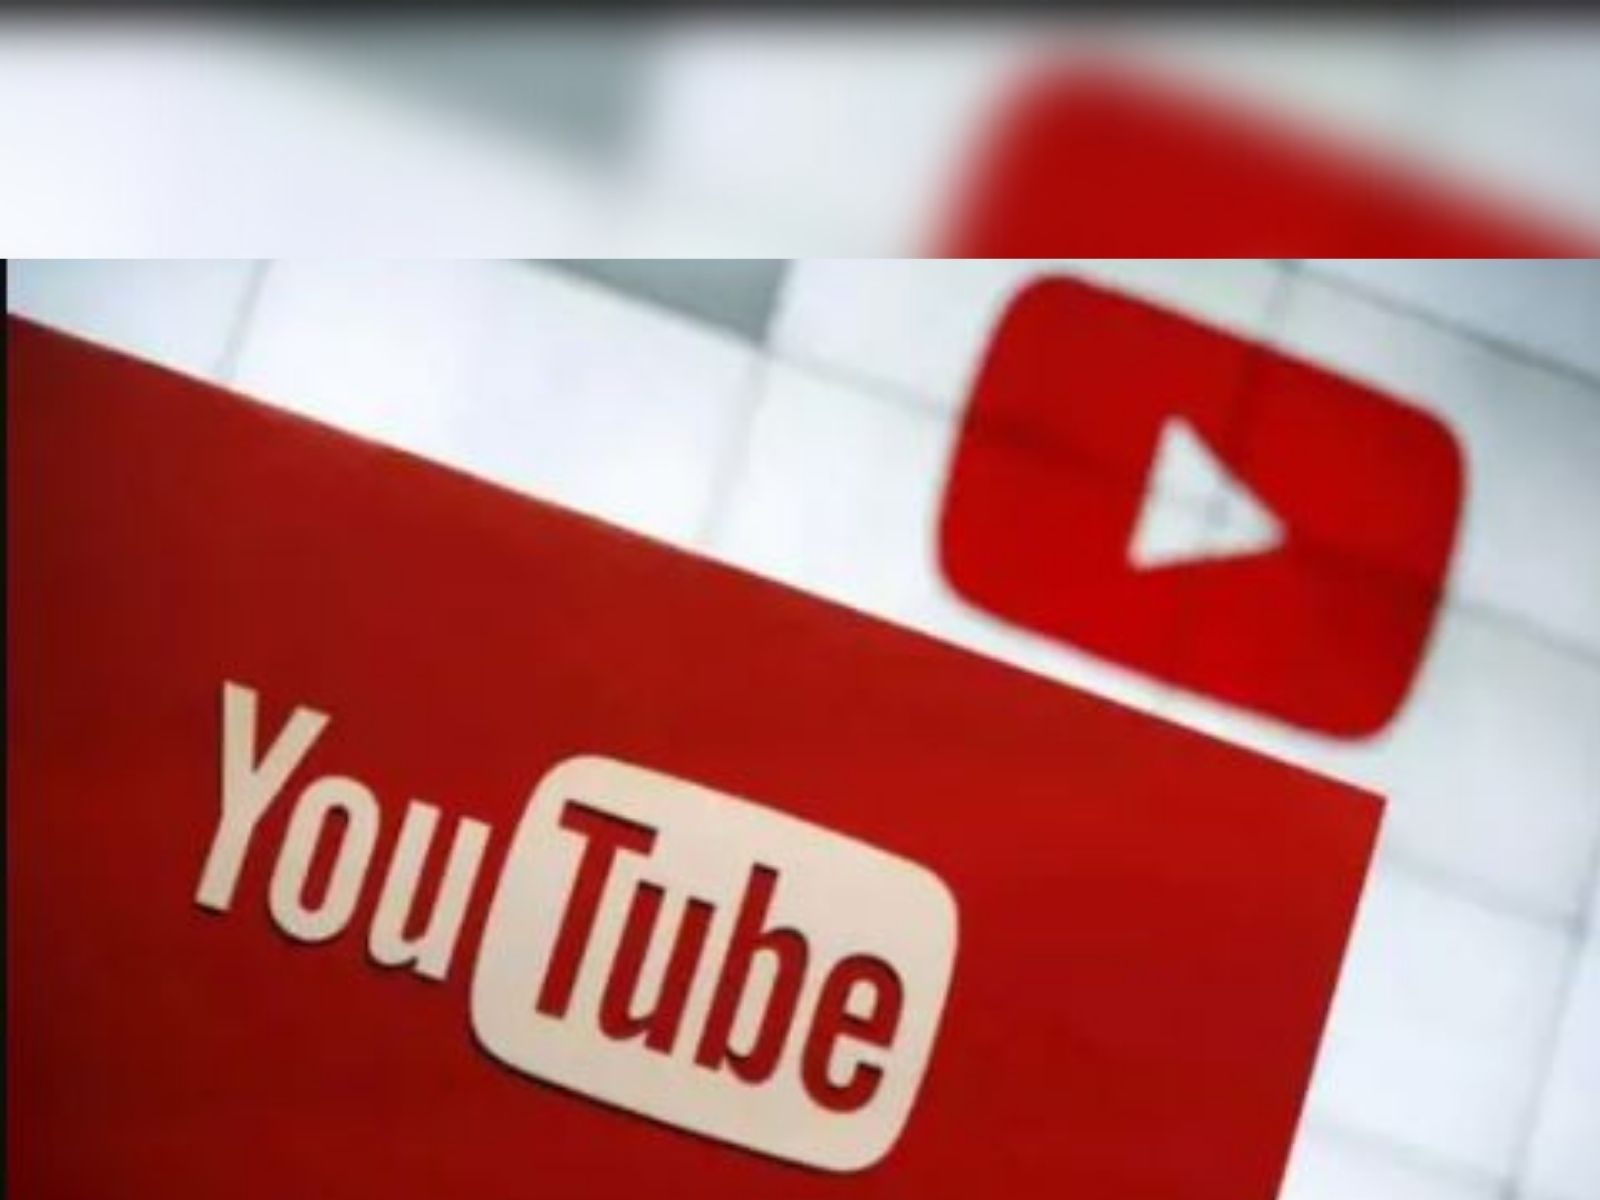  YouTube ਨੇ ਹੈਲਥ ਵੀਡੀਓ ਲਈ 2 ਨਵੇਂ ਫੀਚਰ ਲਾਂਚ ਕੀਤੇ, ਫਰਜ਼ੀ ਪੋਸਟਾਂ ਤੋਂ ਮਿਲੇਗਾ ਛੁਟਕਾਰਾ